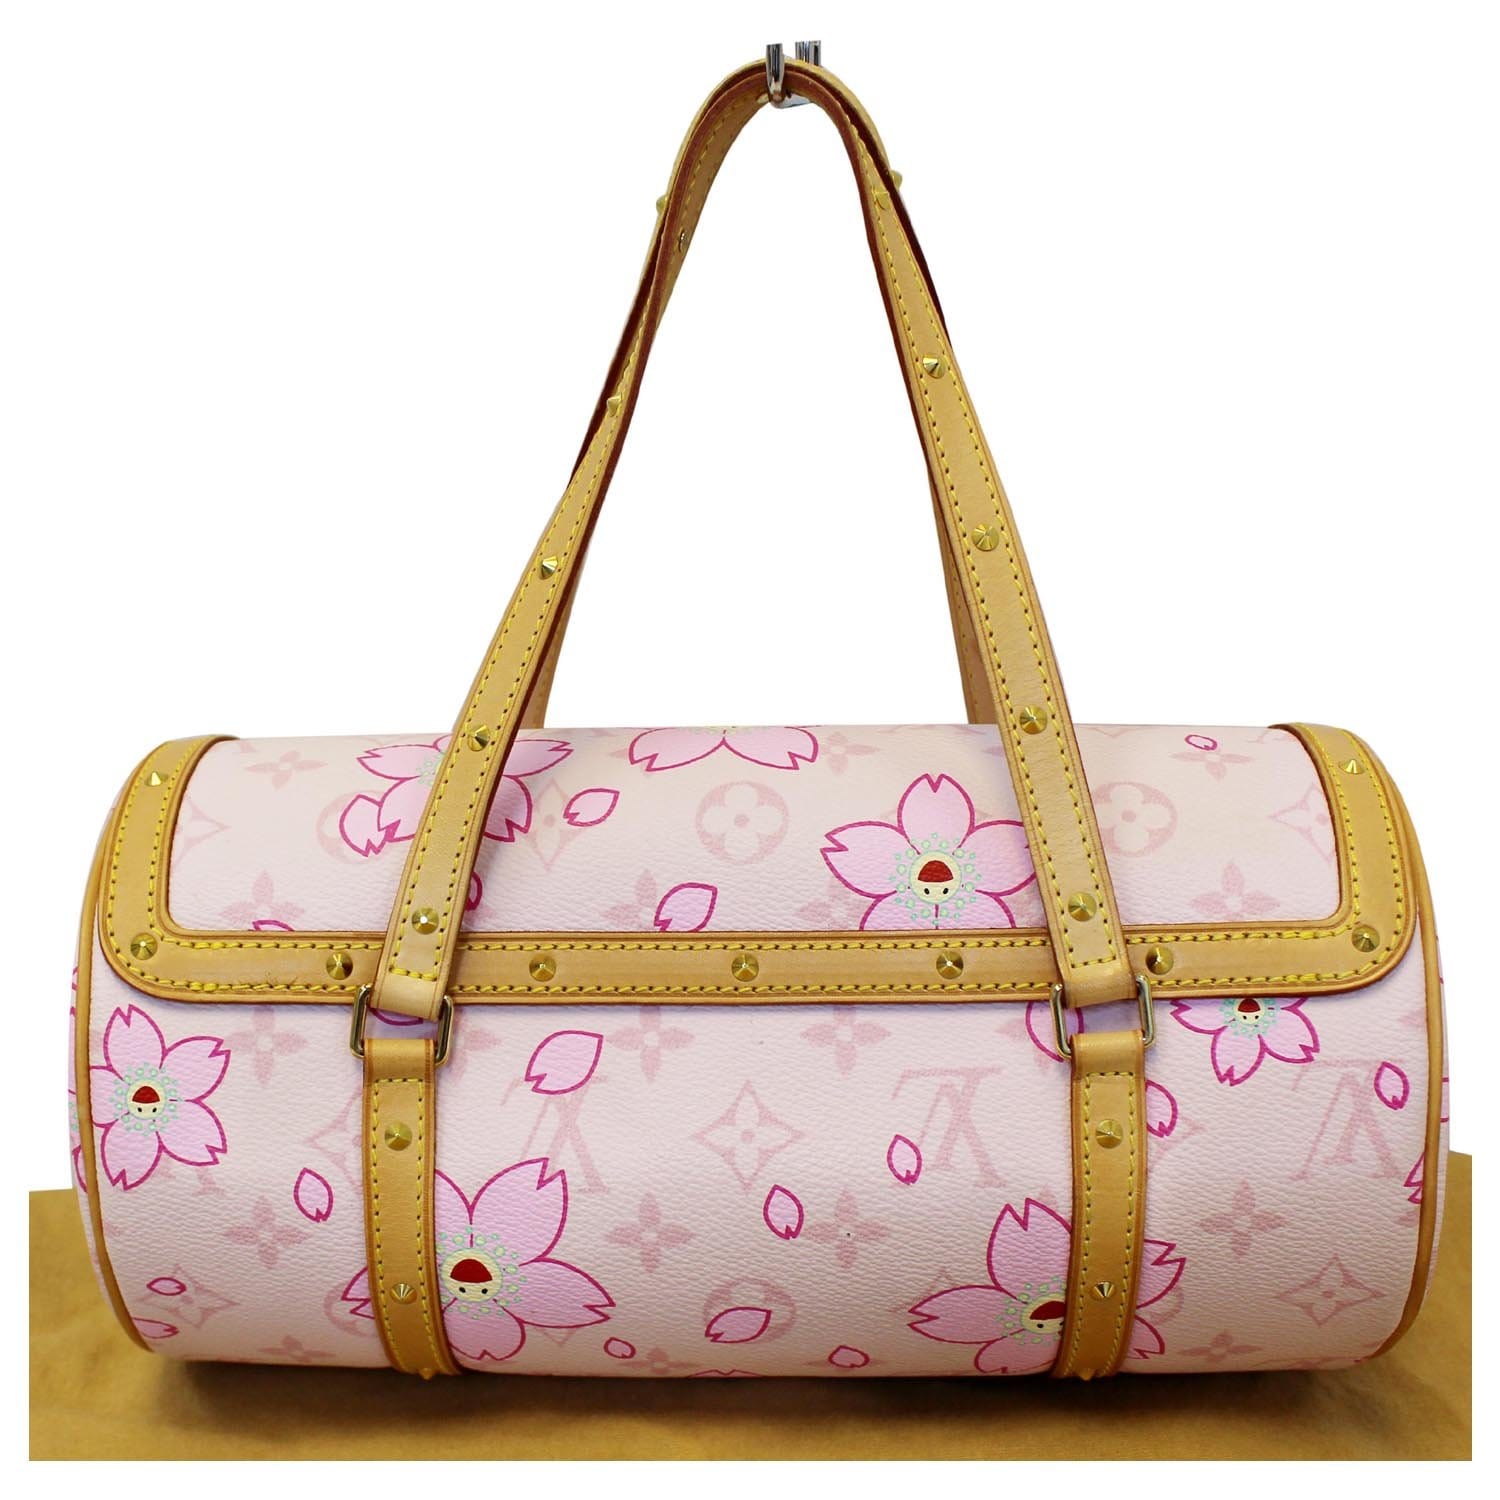 LOUIS VUITTON Auth Pink Noefull FO0173 Tote Shoulder Handbag Bag FLORAL  FLower